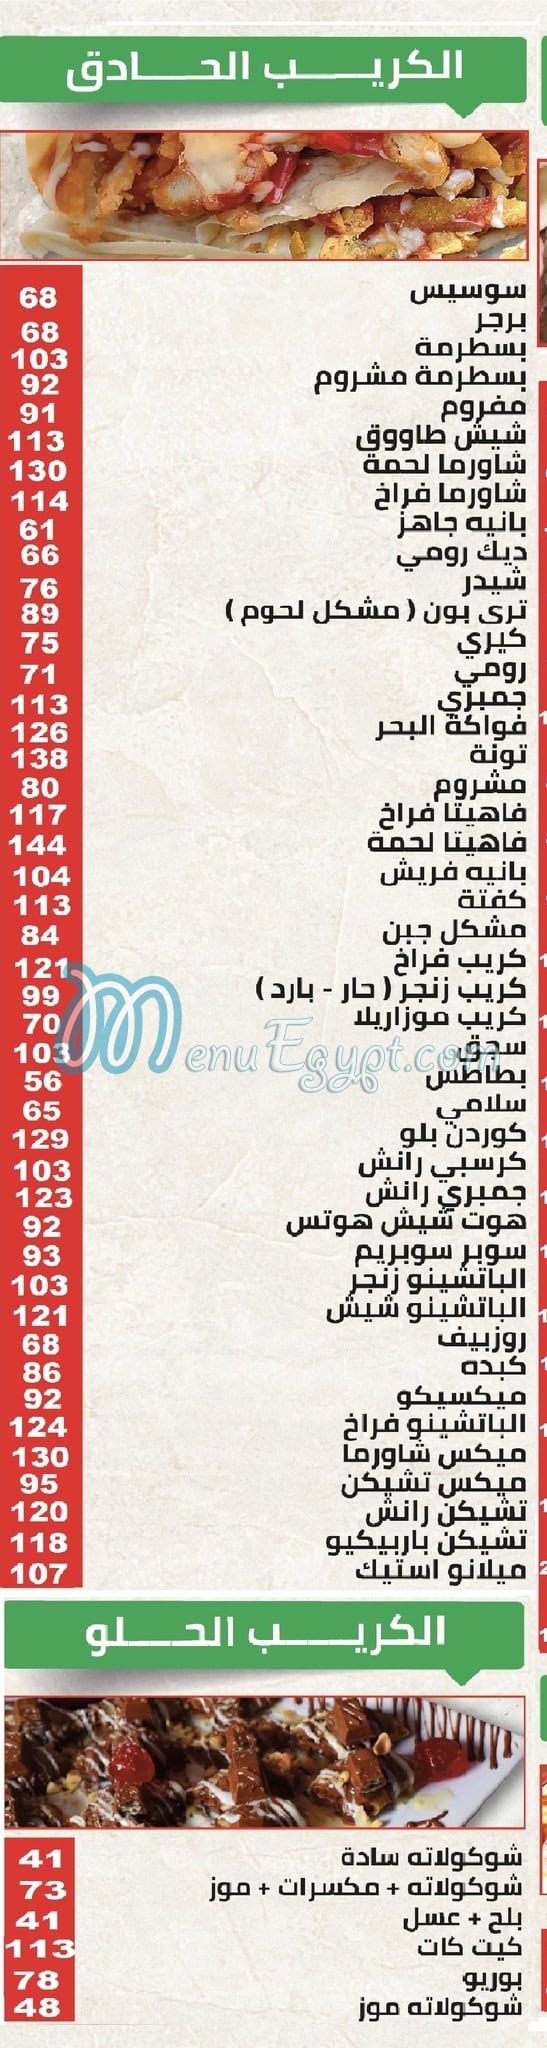 رقم تري بون مصر